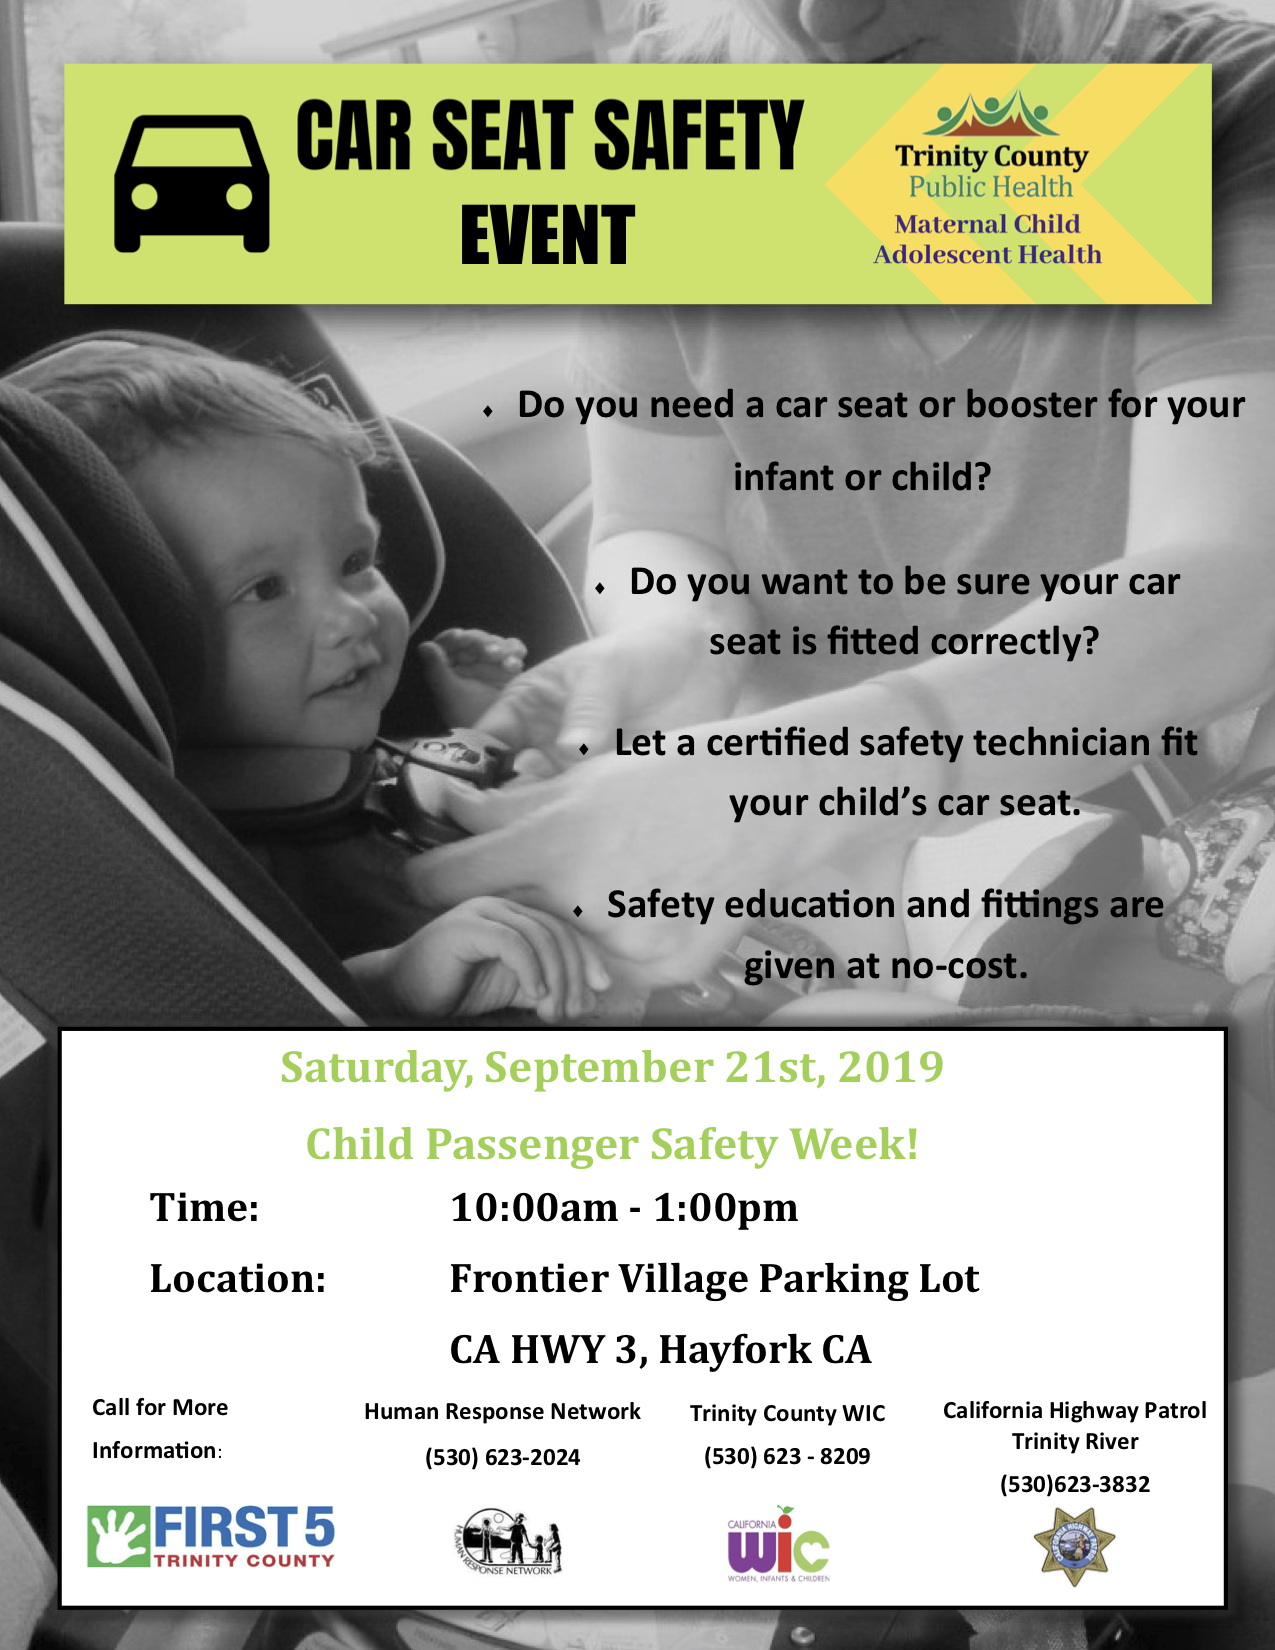 Trinity County Public Health Hosting Car Seat Safety Event on Saturday